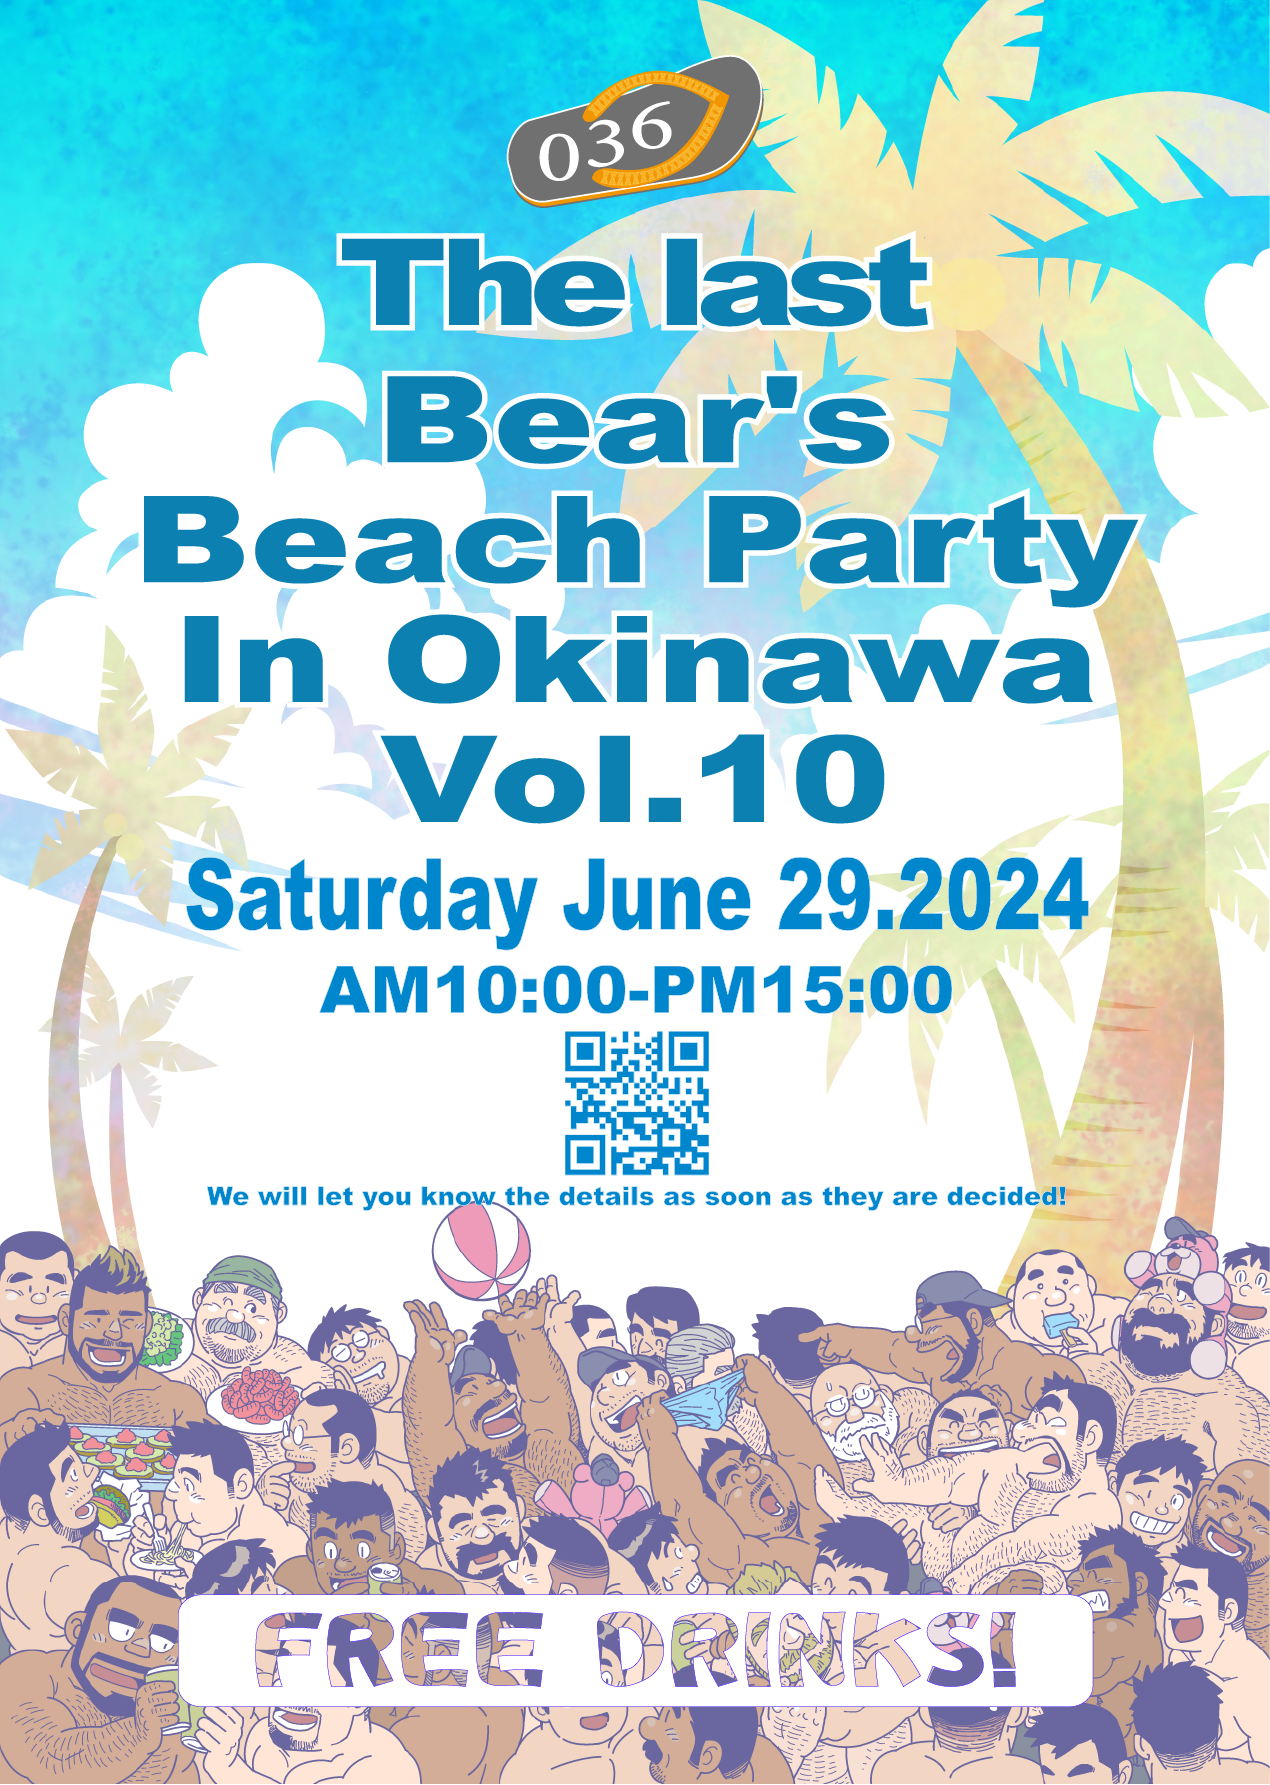 Bear's Beach Party In Okinawa Vol.10